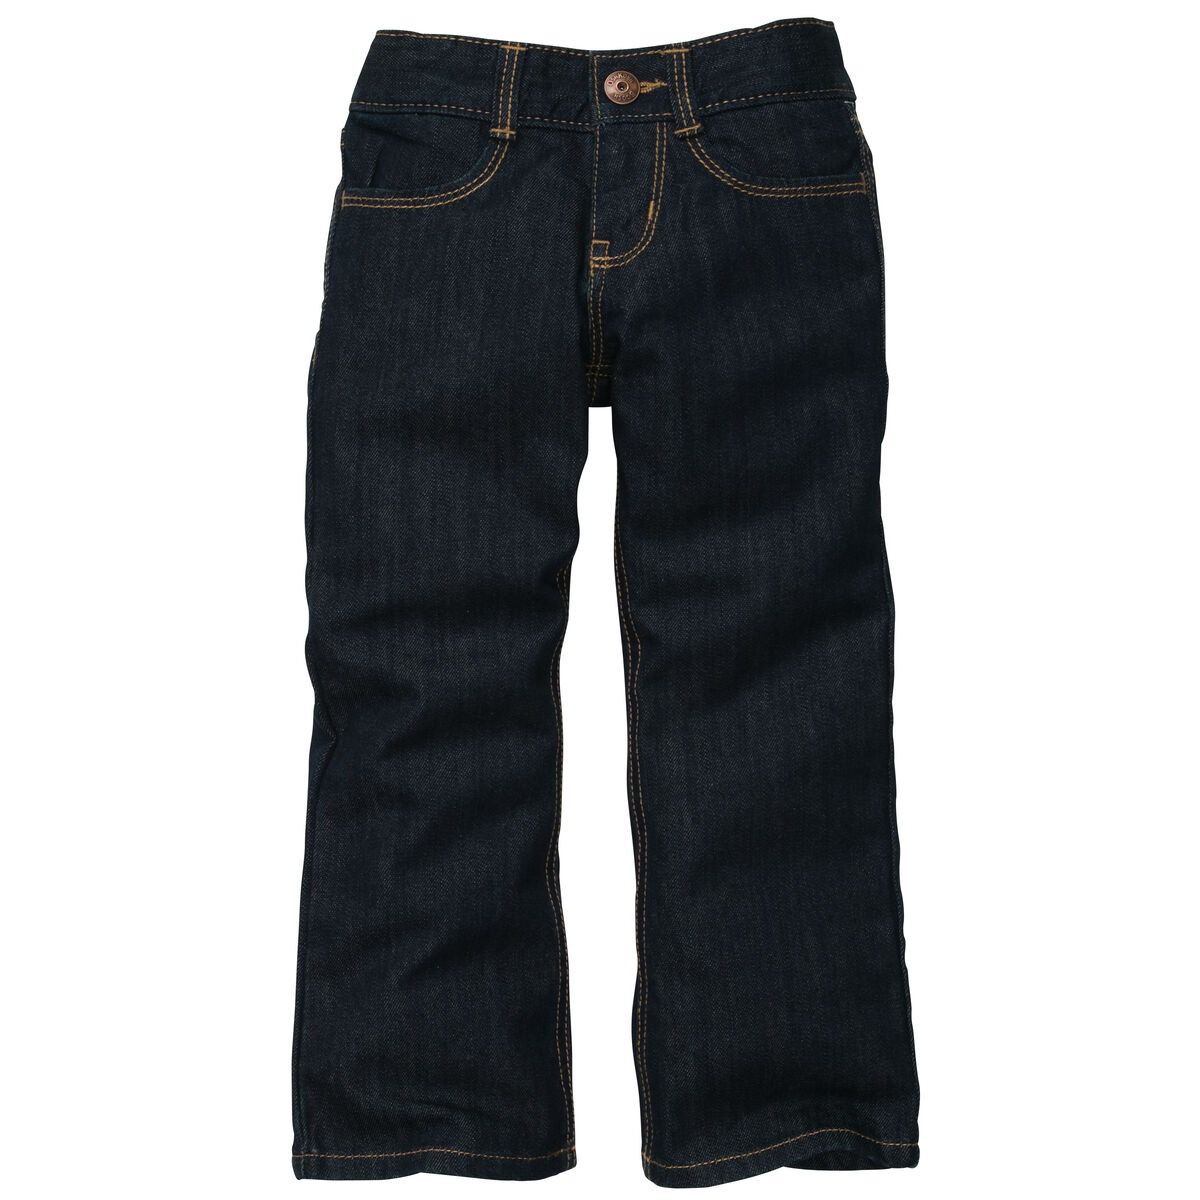 Bootcut Jeans - Baltimore Dark, Denim, hi-res